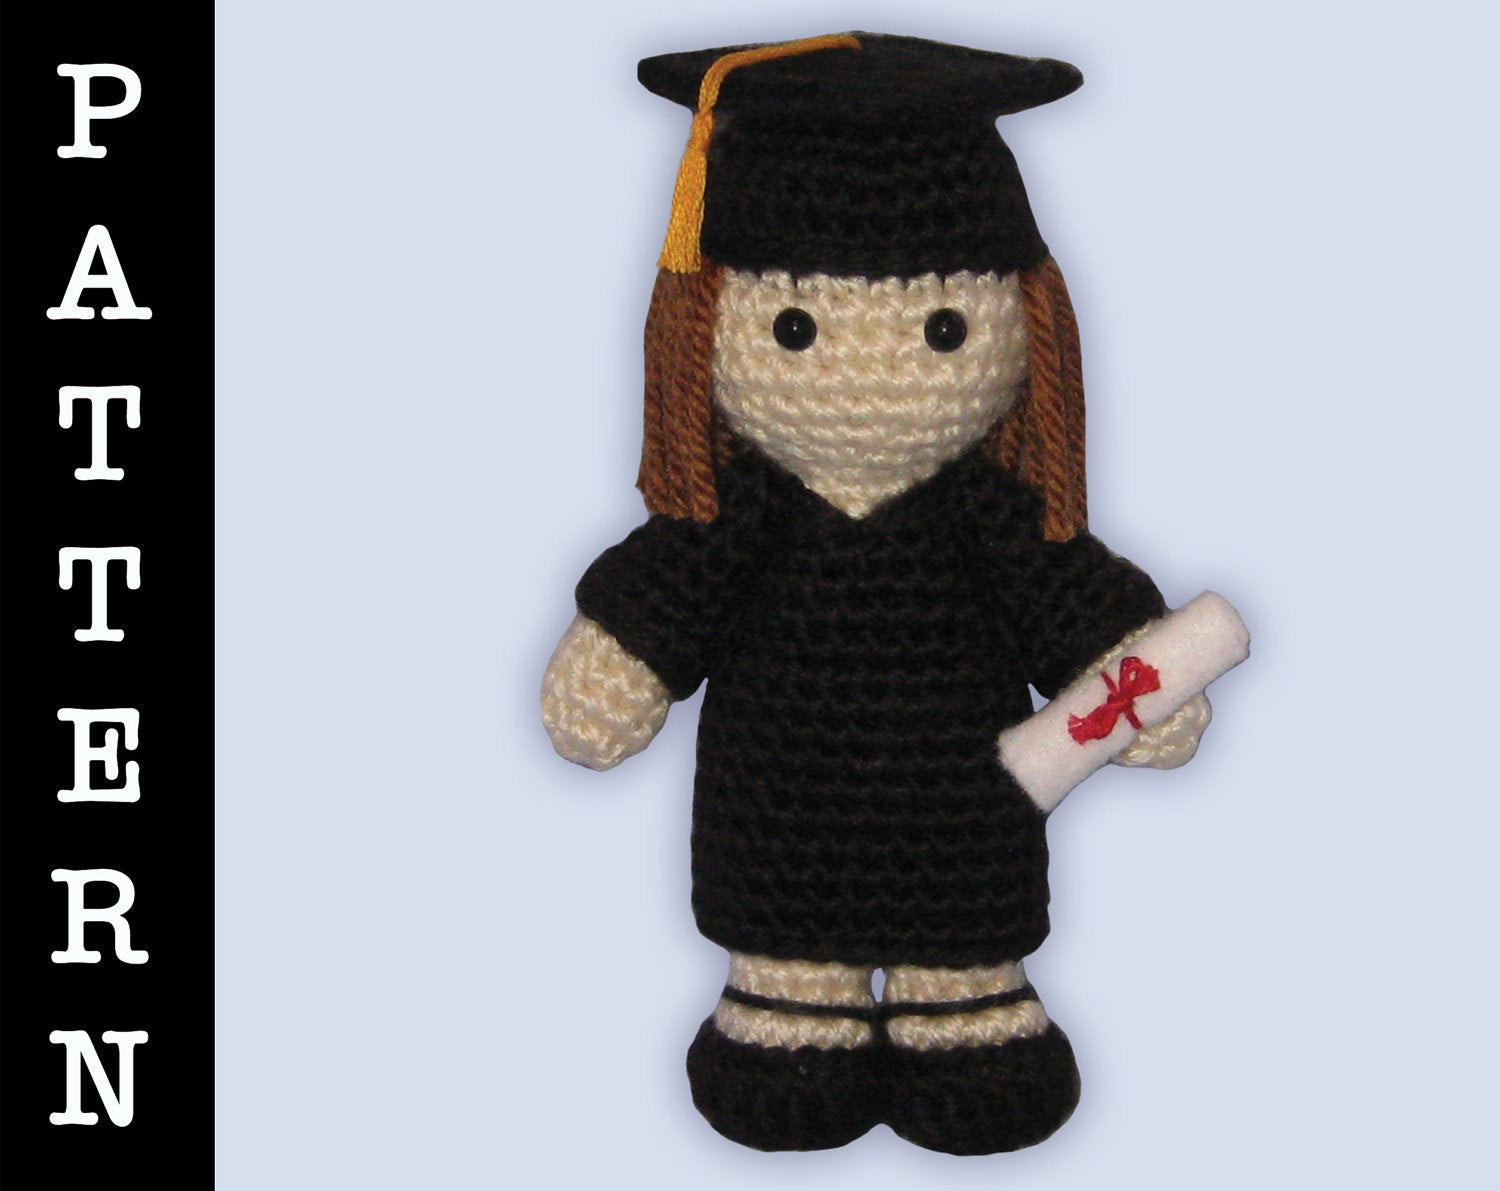 Best ideas about Crochet Graduation Gift Ideas
. Save or Pin Crochet Pattern Amigurumi Graduate Girl Now.